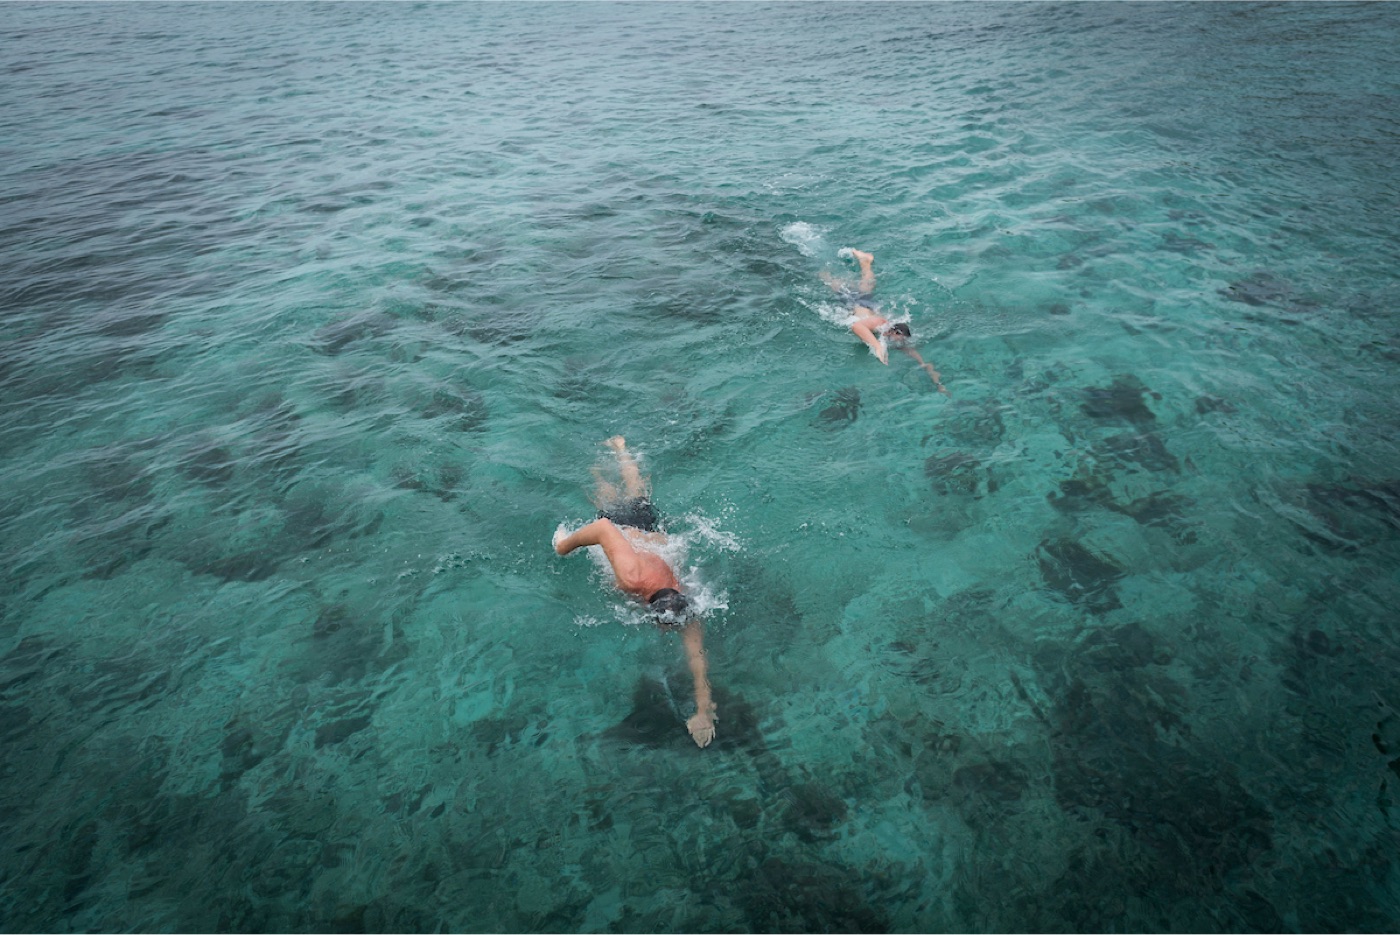 Ocean Swim Fiji - Blog - Ocean Swim Fiji 2019 – watch all the action!